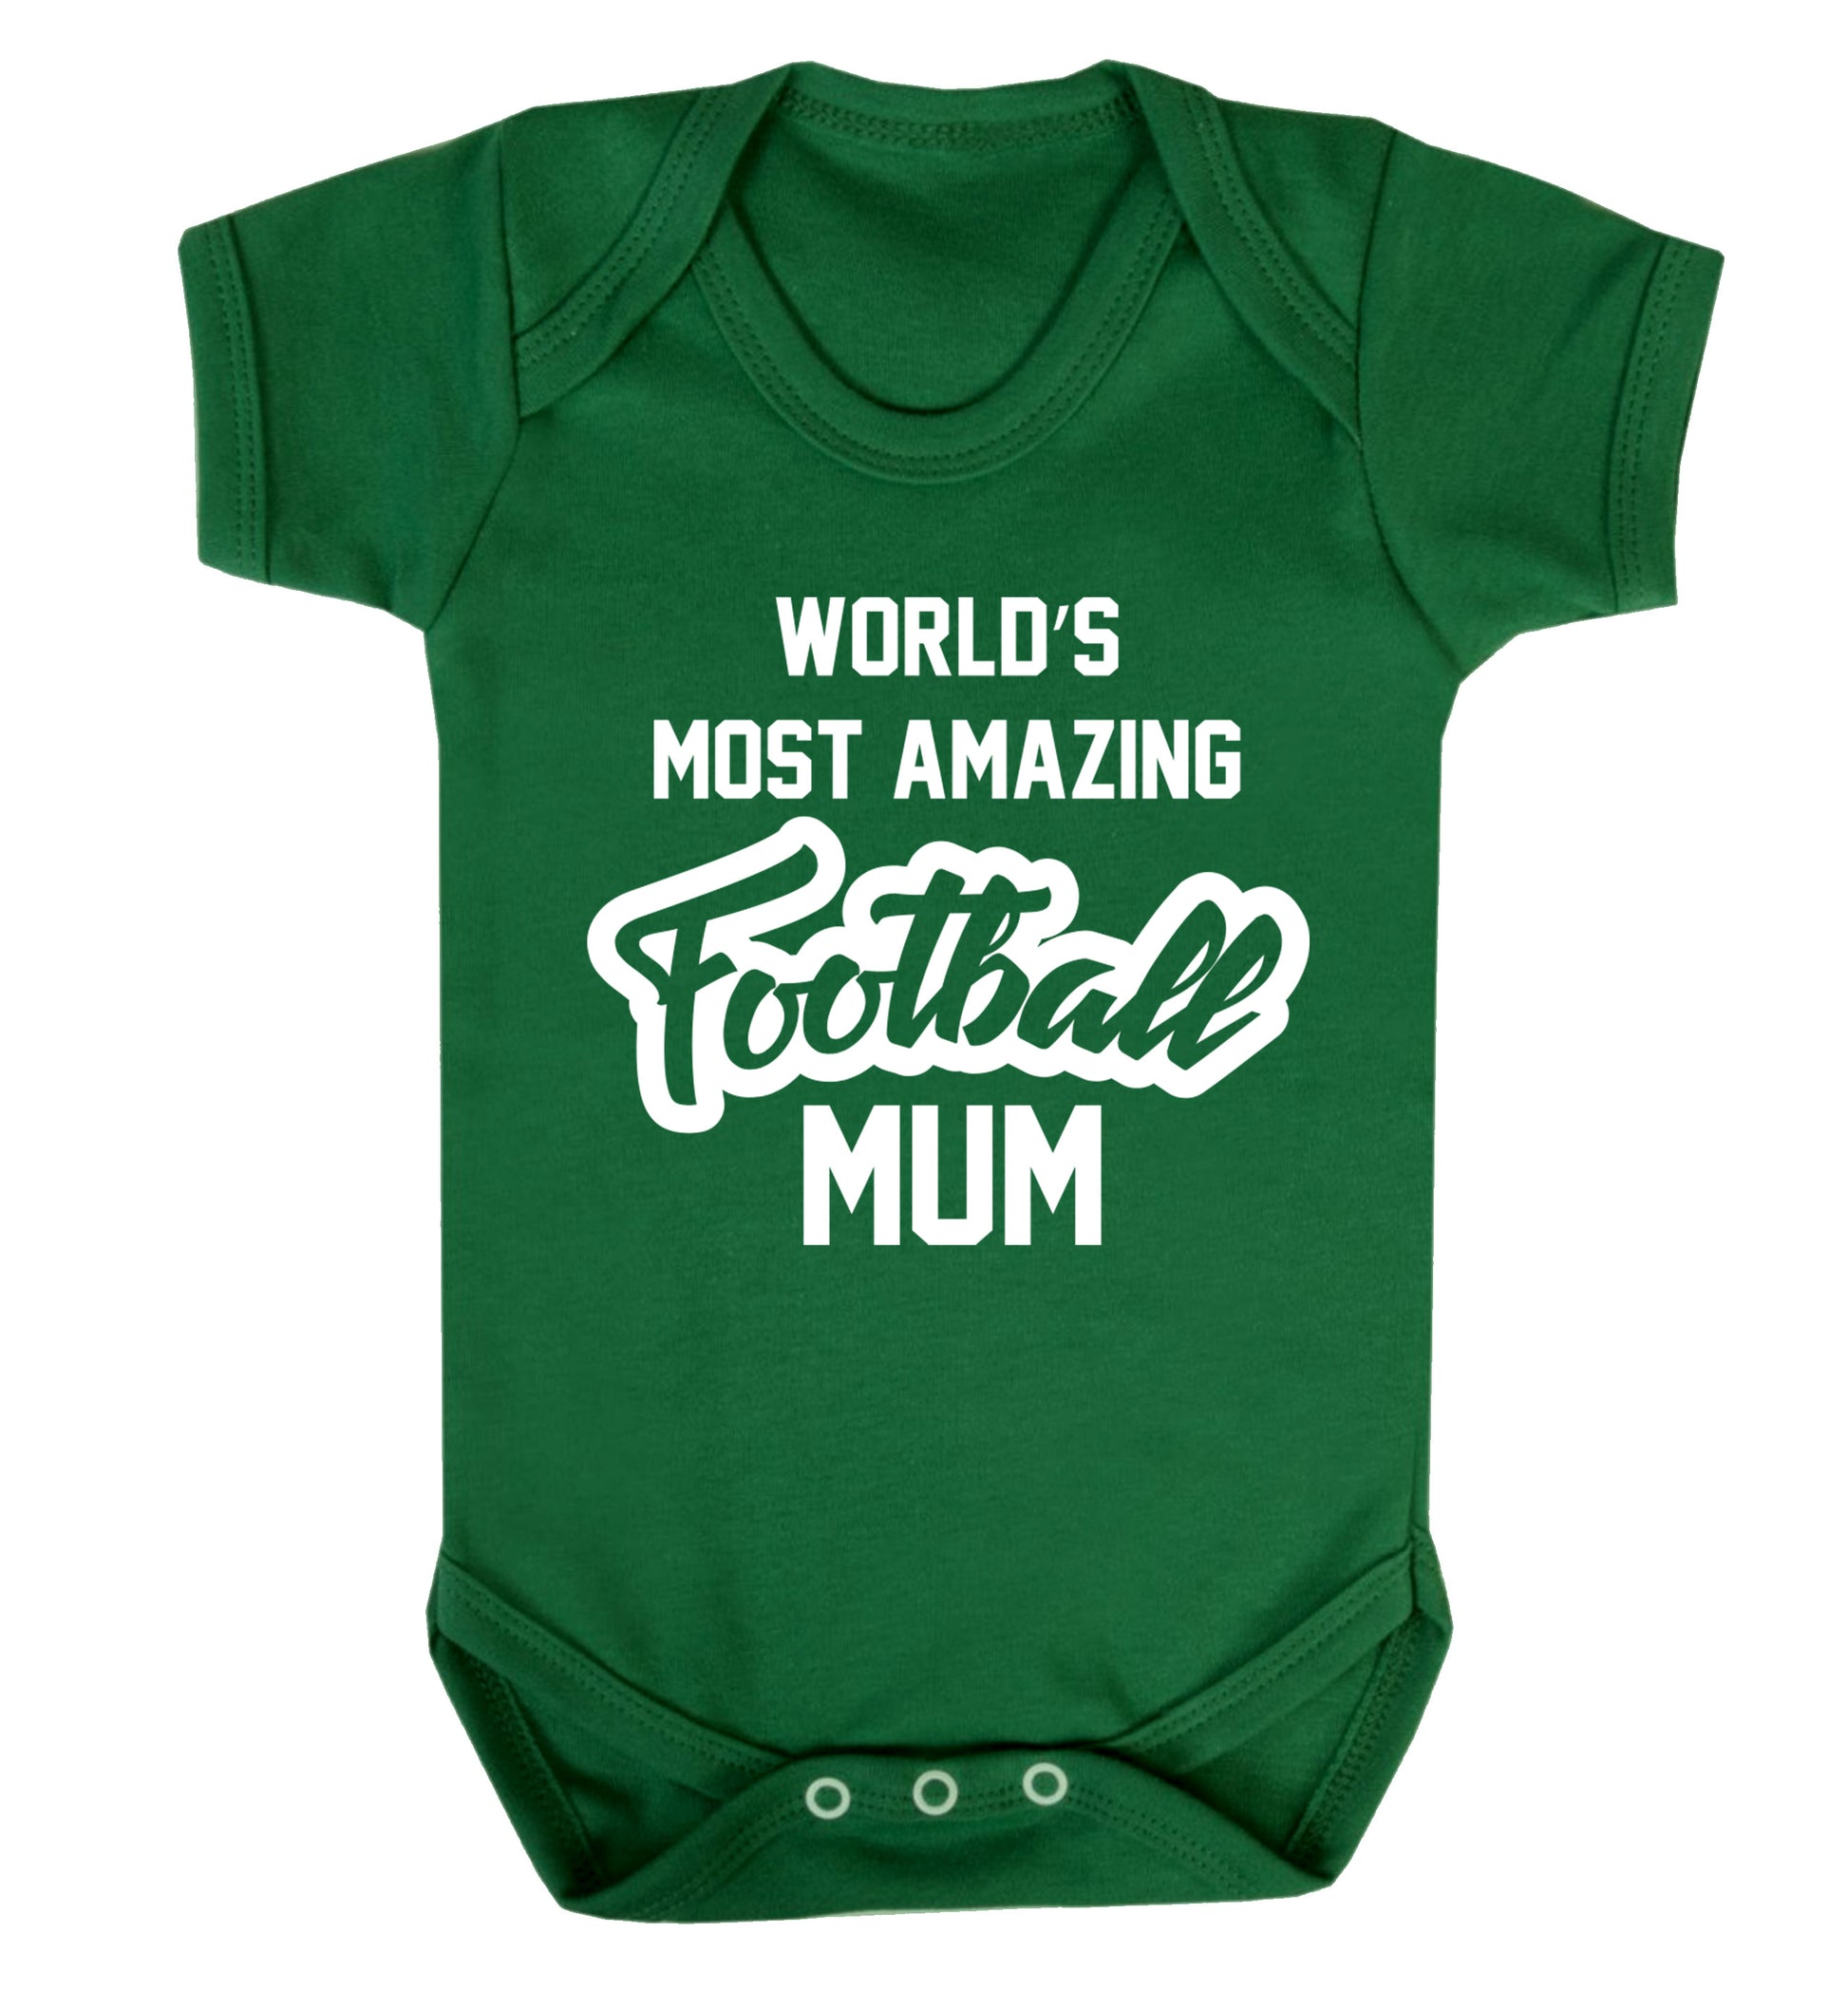 Worlds most amazing football mum Baby Vest green 18-24 months